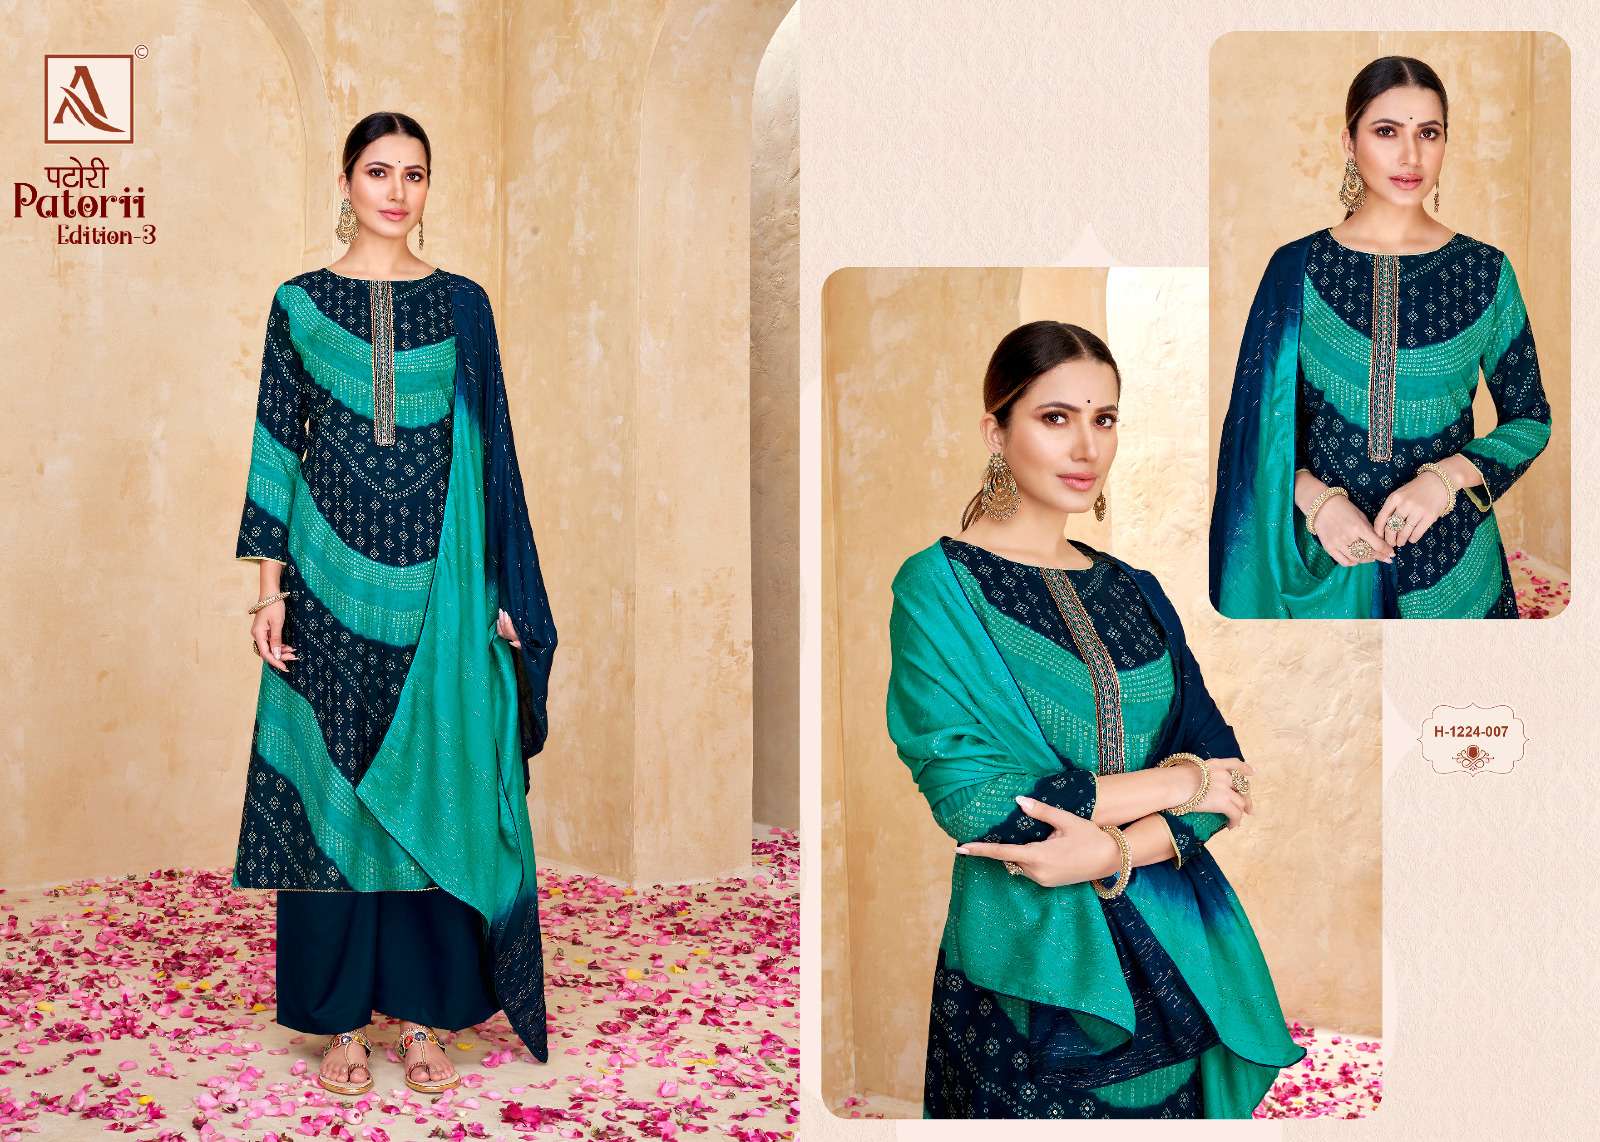 alok suit patorii edition vol-3 fancy designer salwar kameez catalogue wholesale price surat 